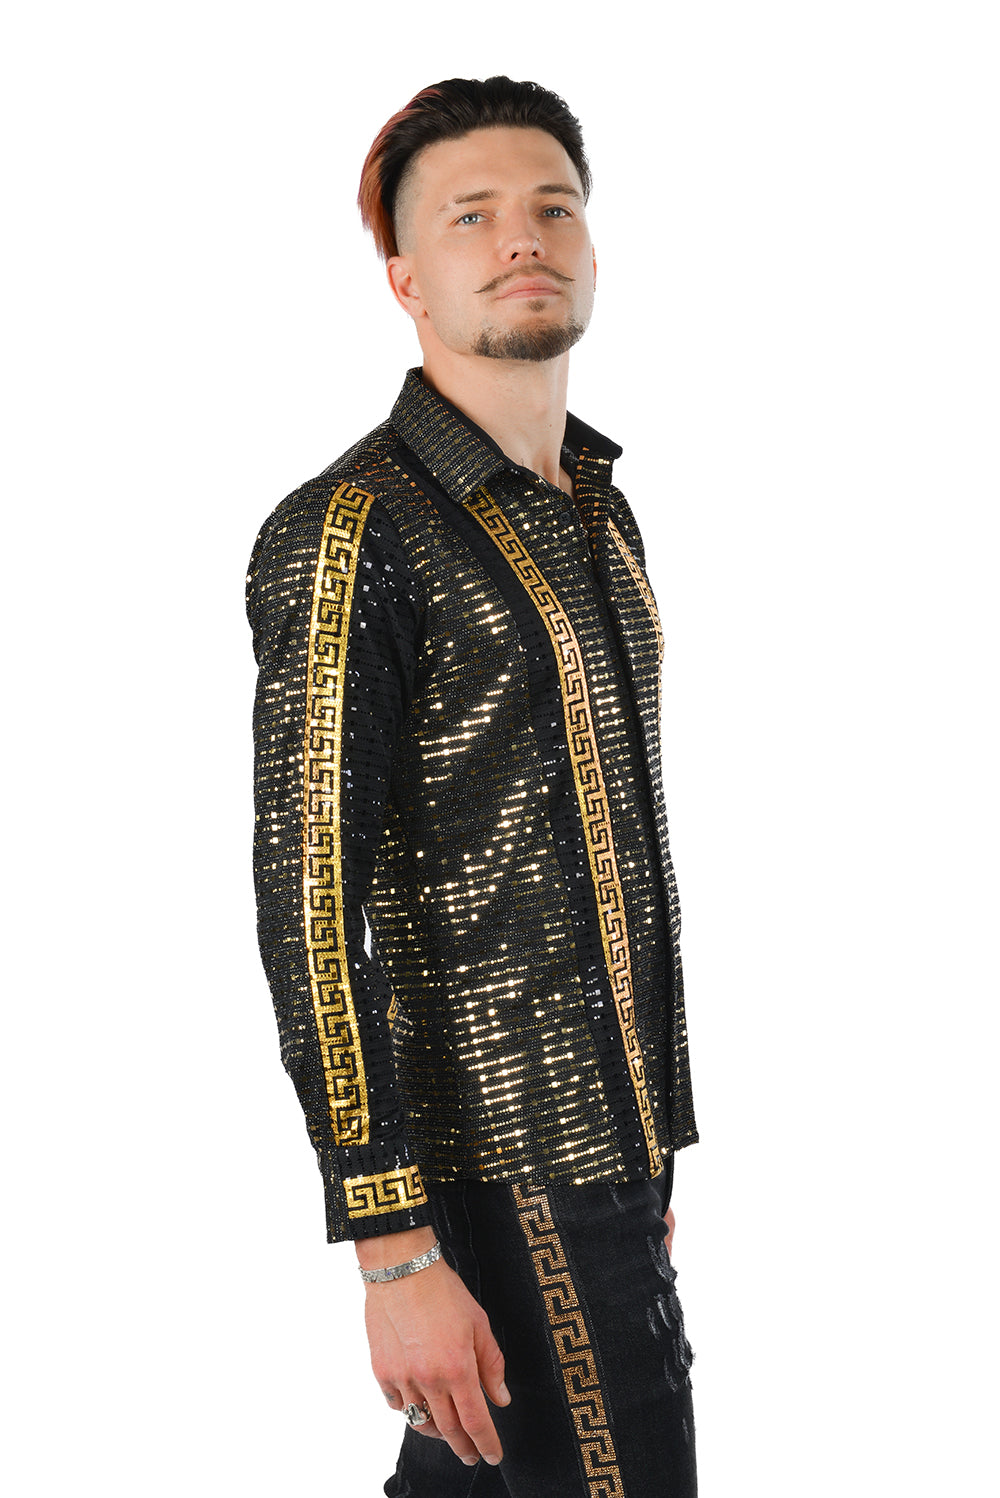 BARABAS Men's Two Tone Shiny Luxury Button Down Long Sleeve Shirt KP202